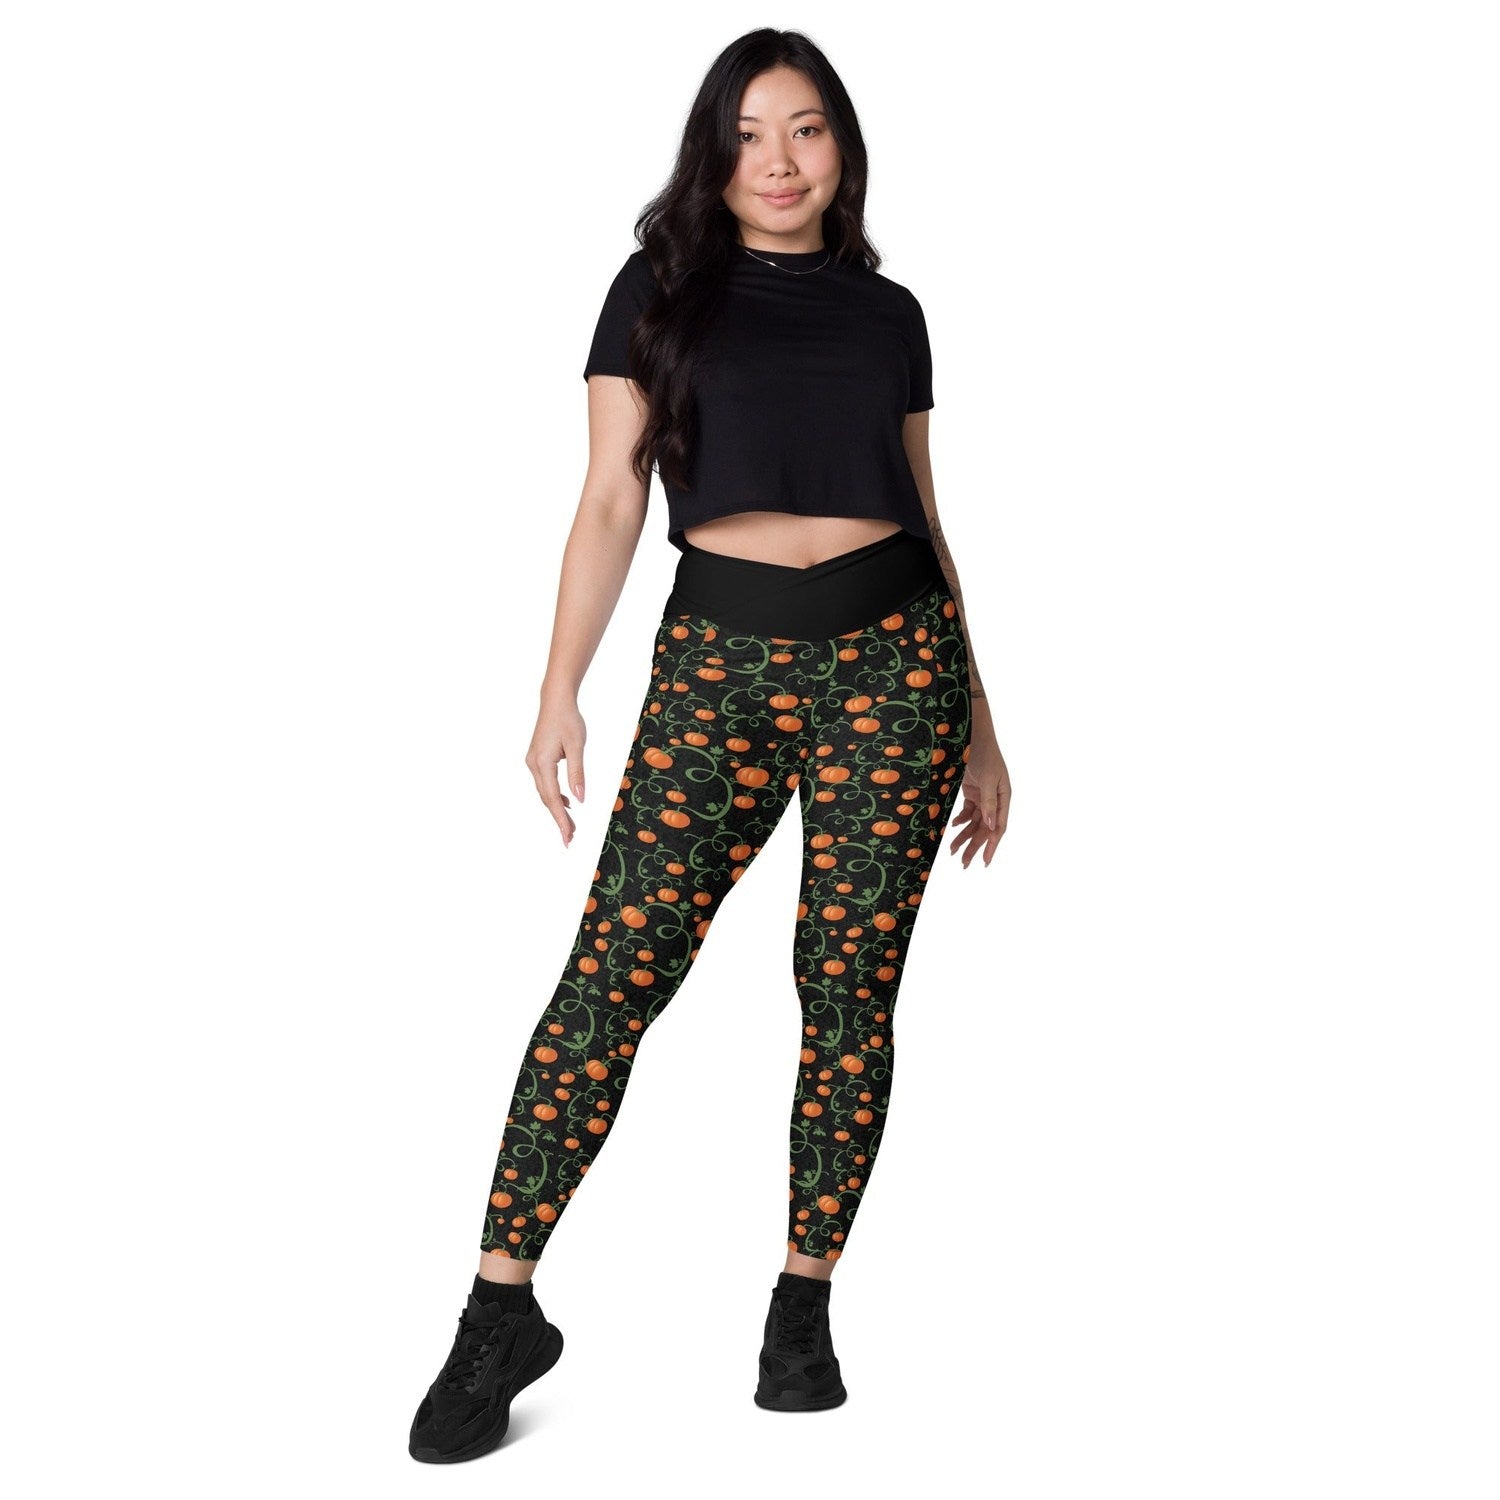 Pumpkin Vine Crossover leggings with Pockets